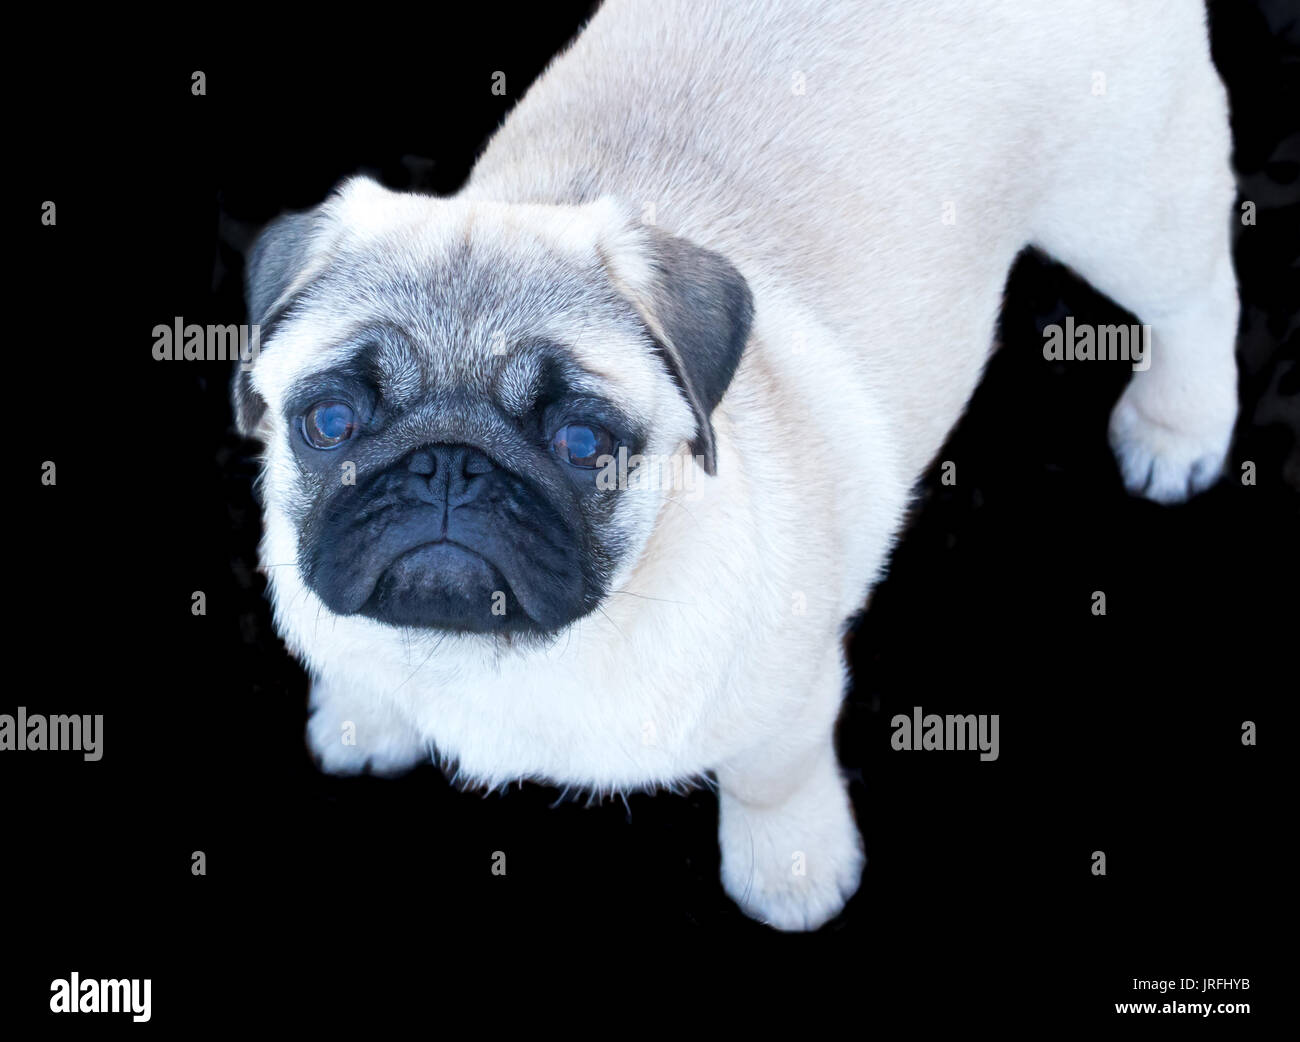 Purebred pug puppy pet dog isolated on black background Stock Photo